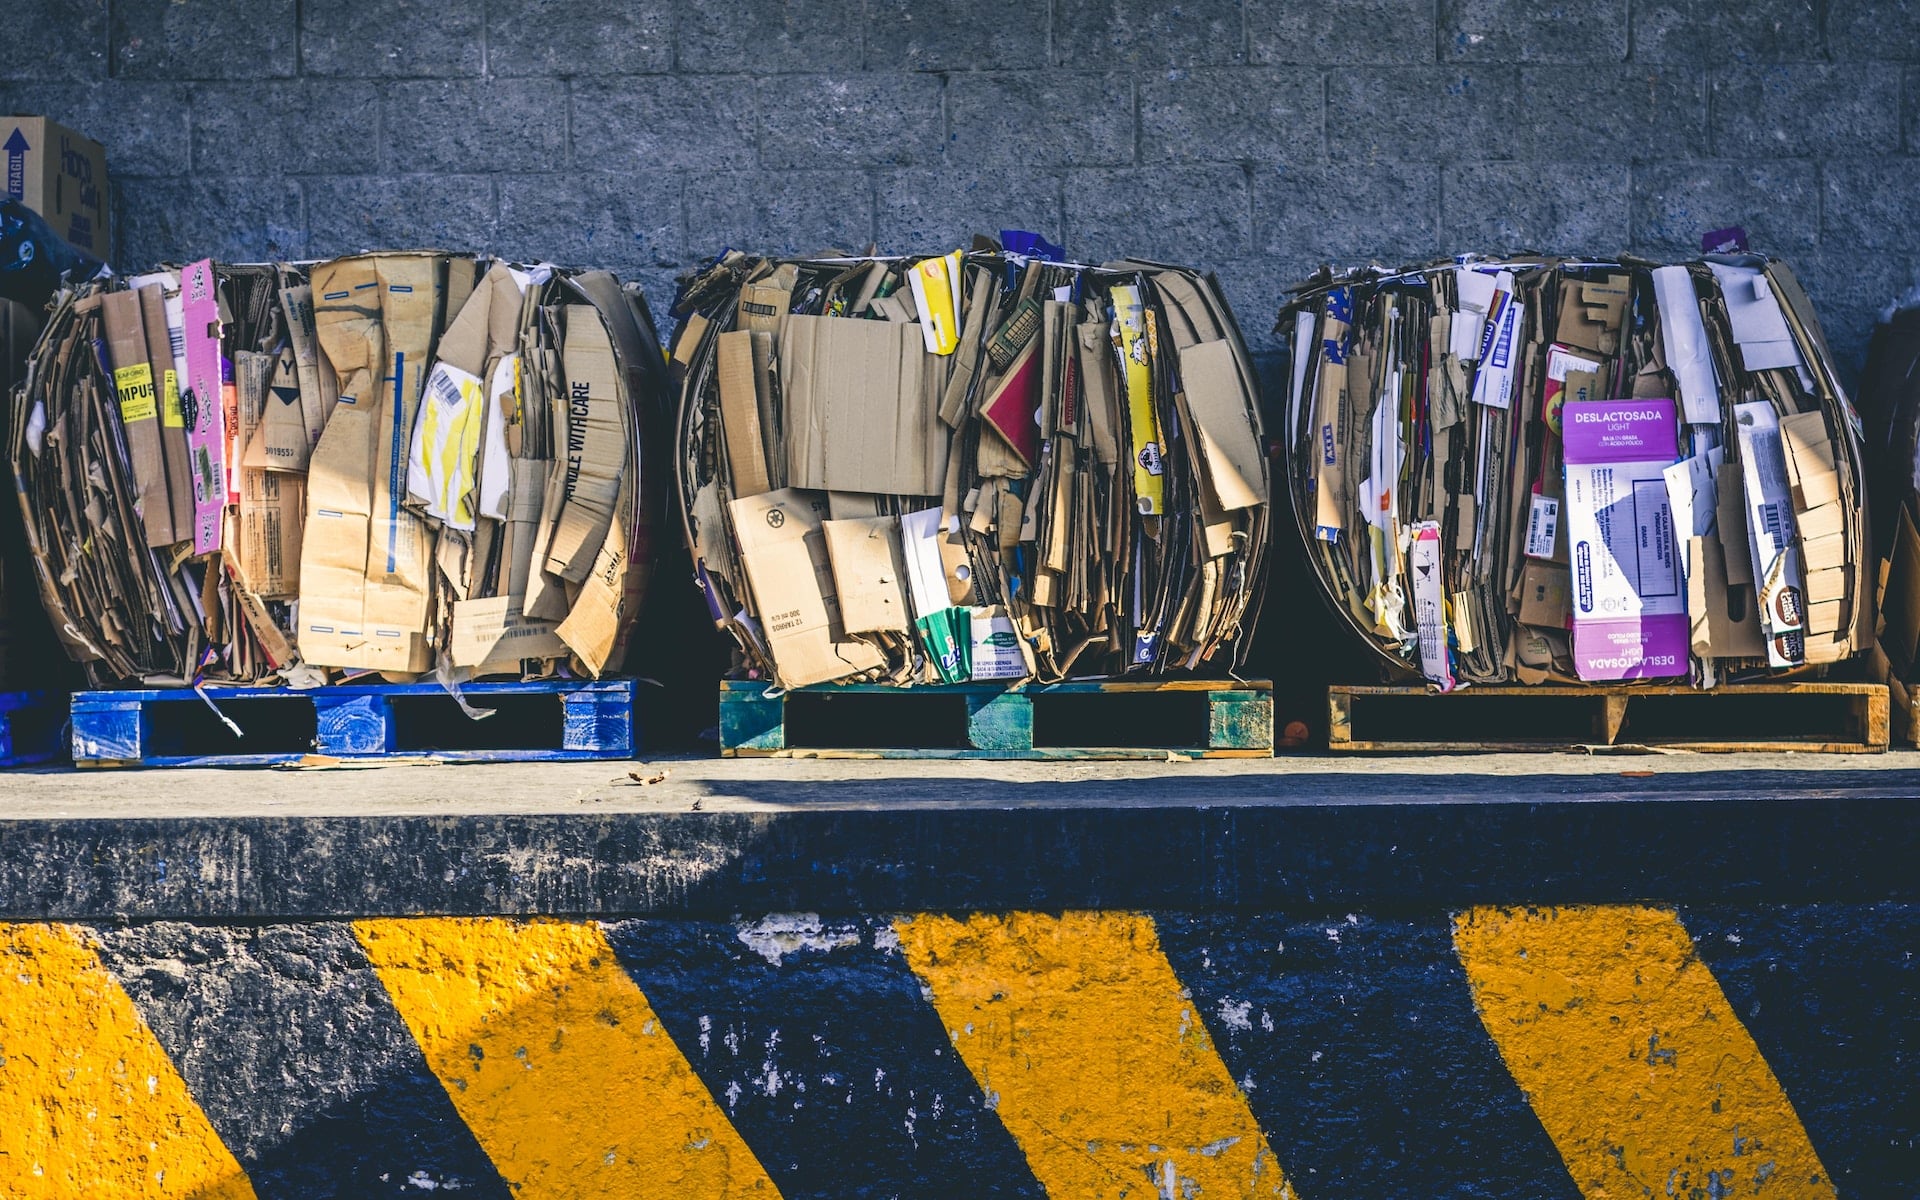 Rental dumpsters full of cardboard that showcase one of the benefits of regular dumpster rentals – eliminating paper litter.